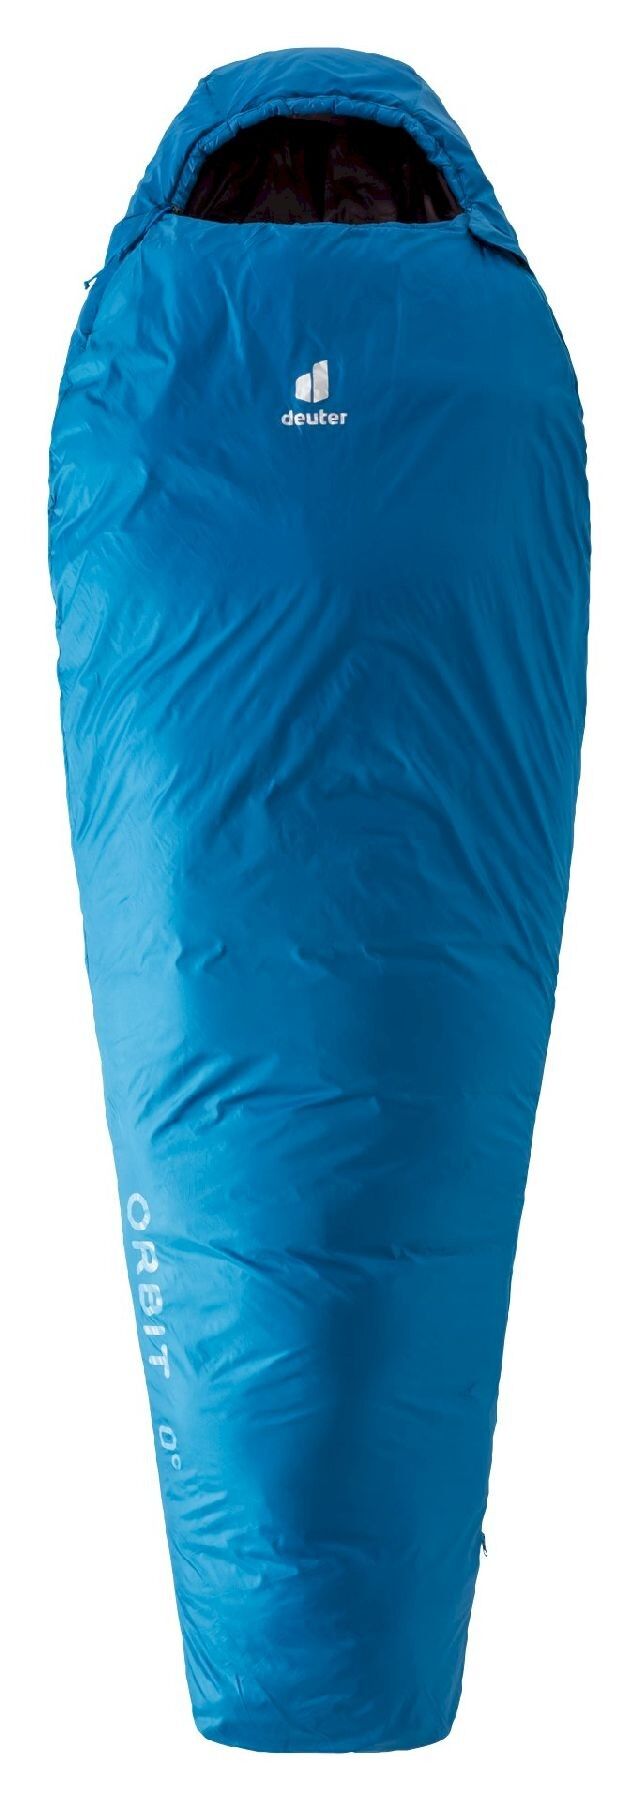 Deuter Orbit 0° - Sleeping bag